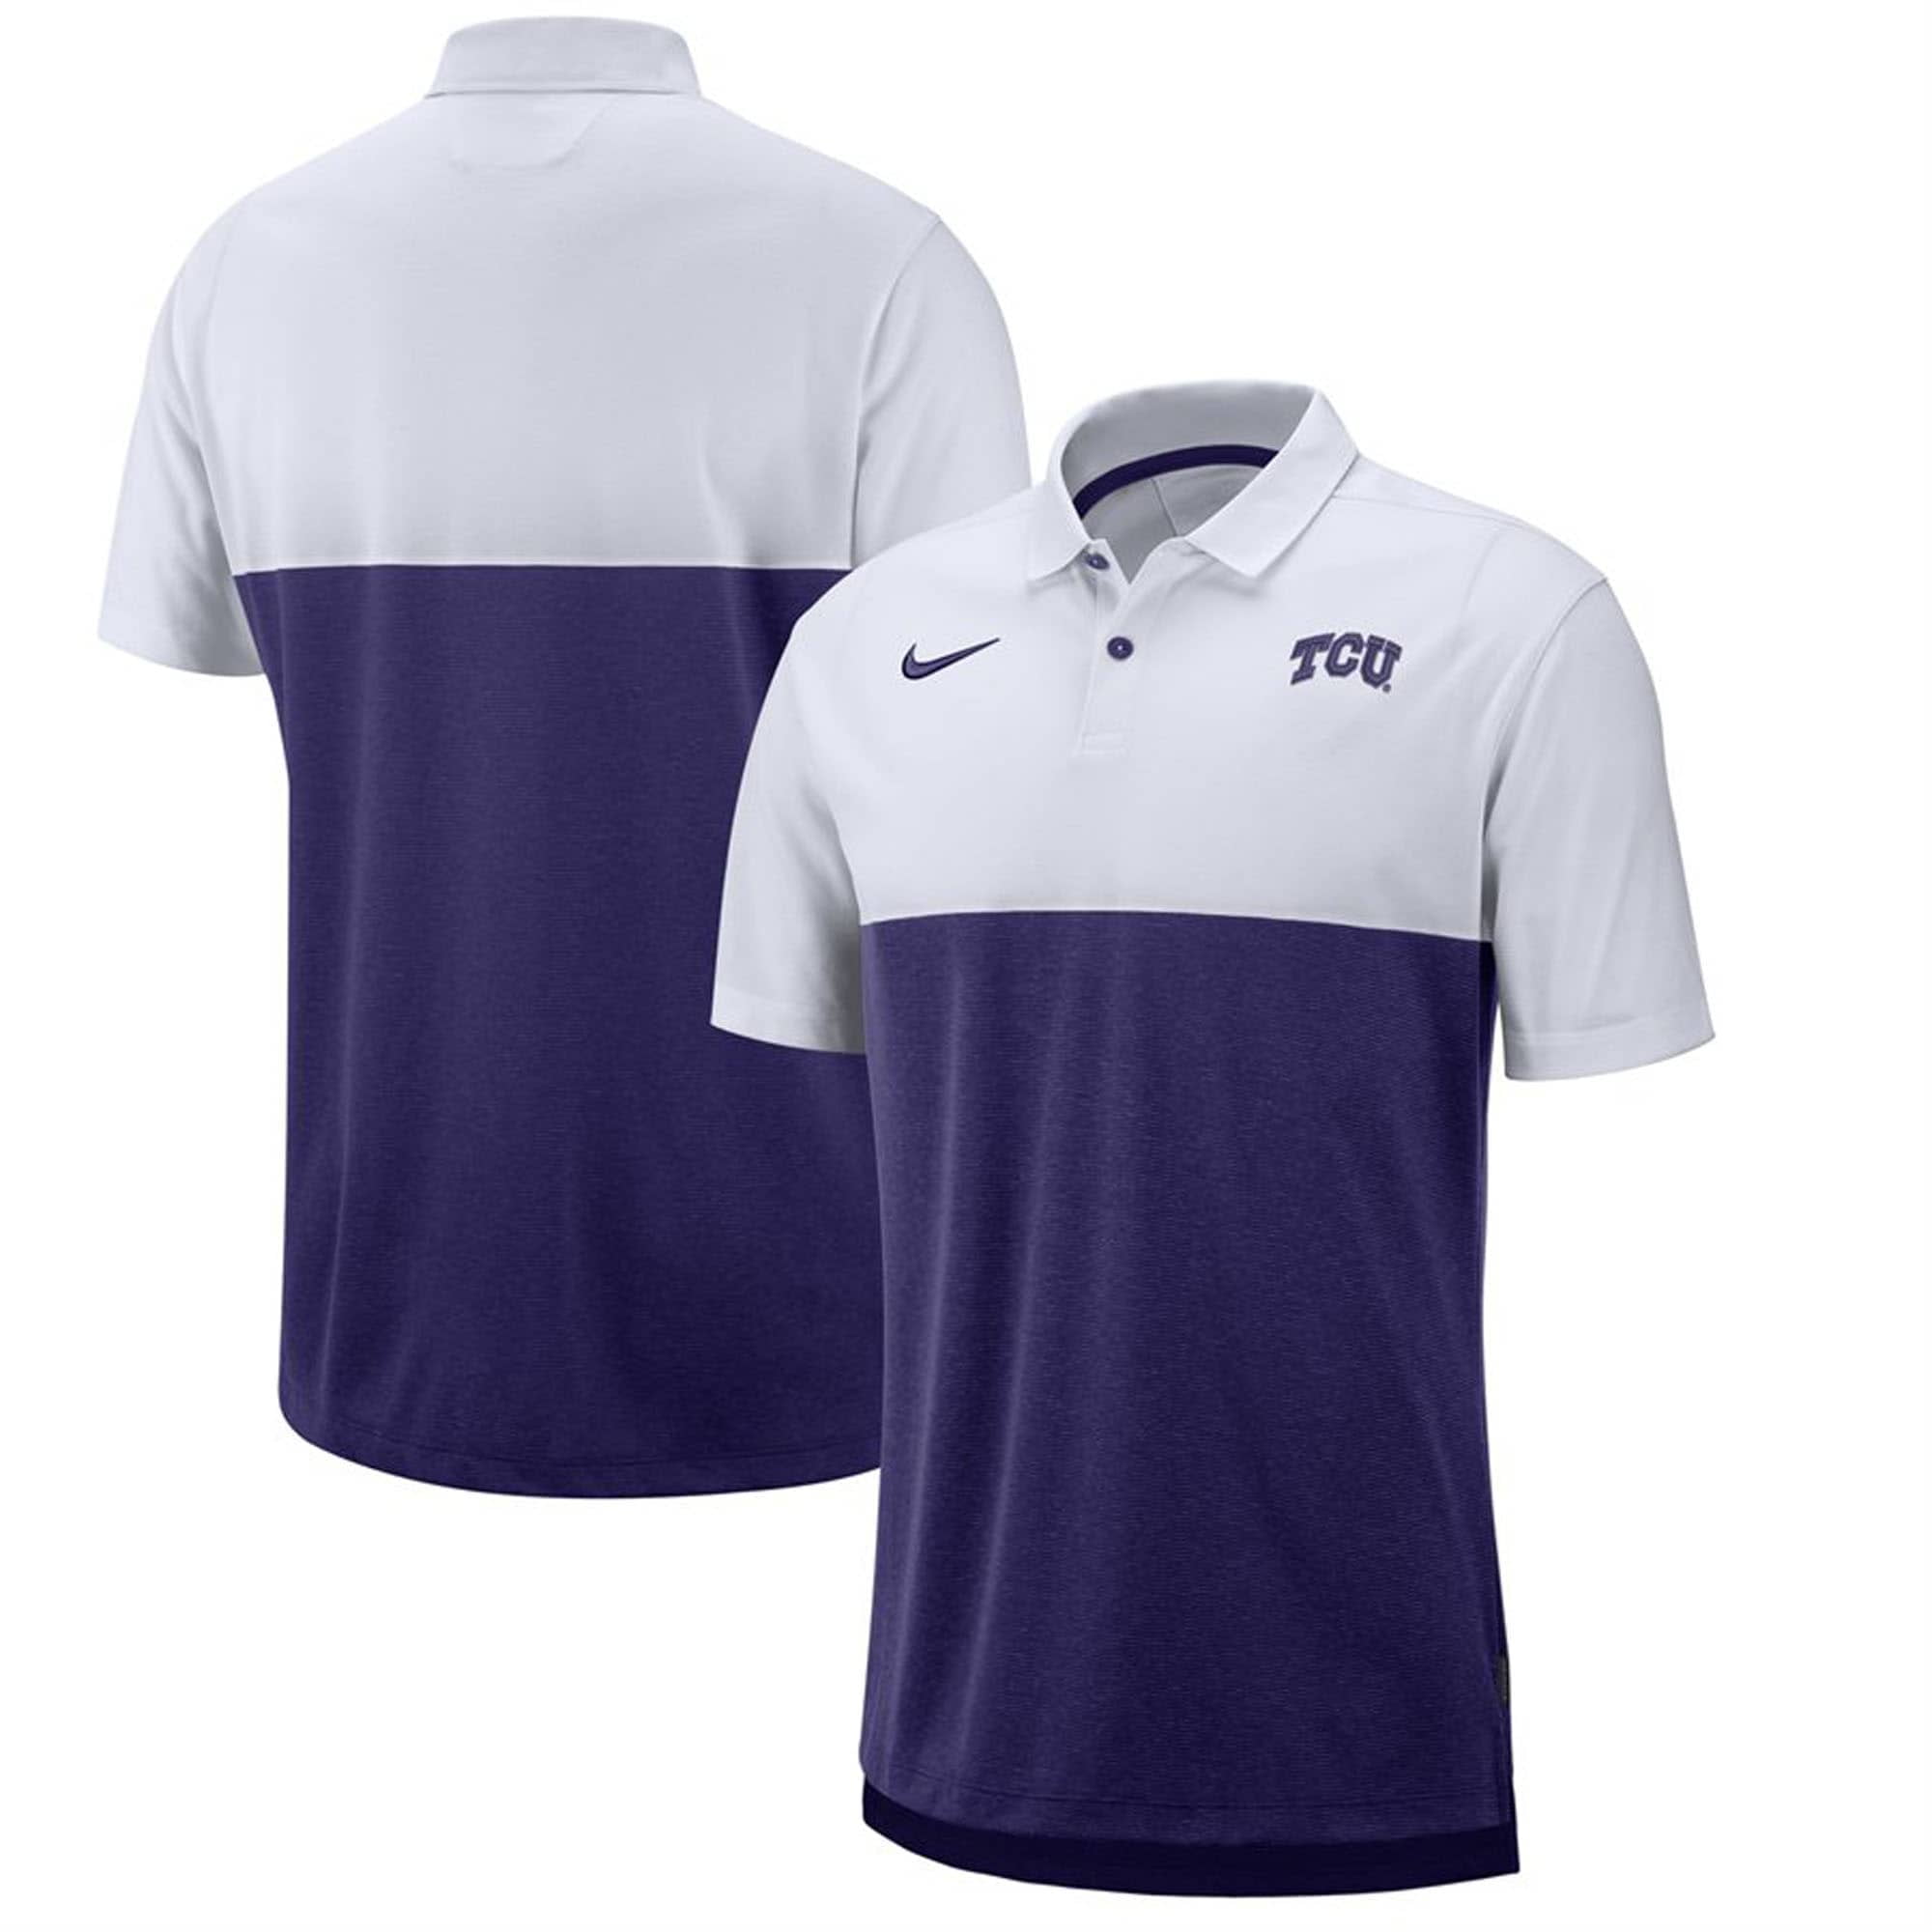 Nike - Nike Men's TCU Horned Frogs White/Purple Dri-FIT Breathe ...